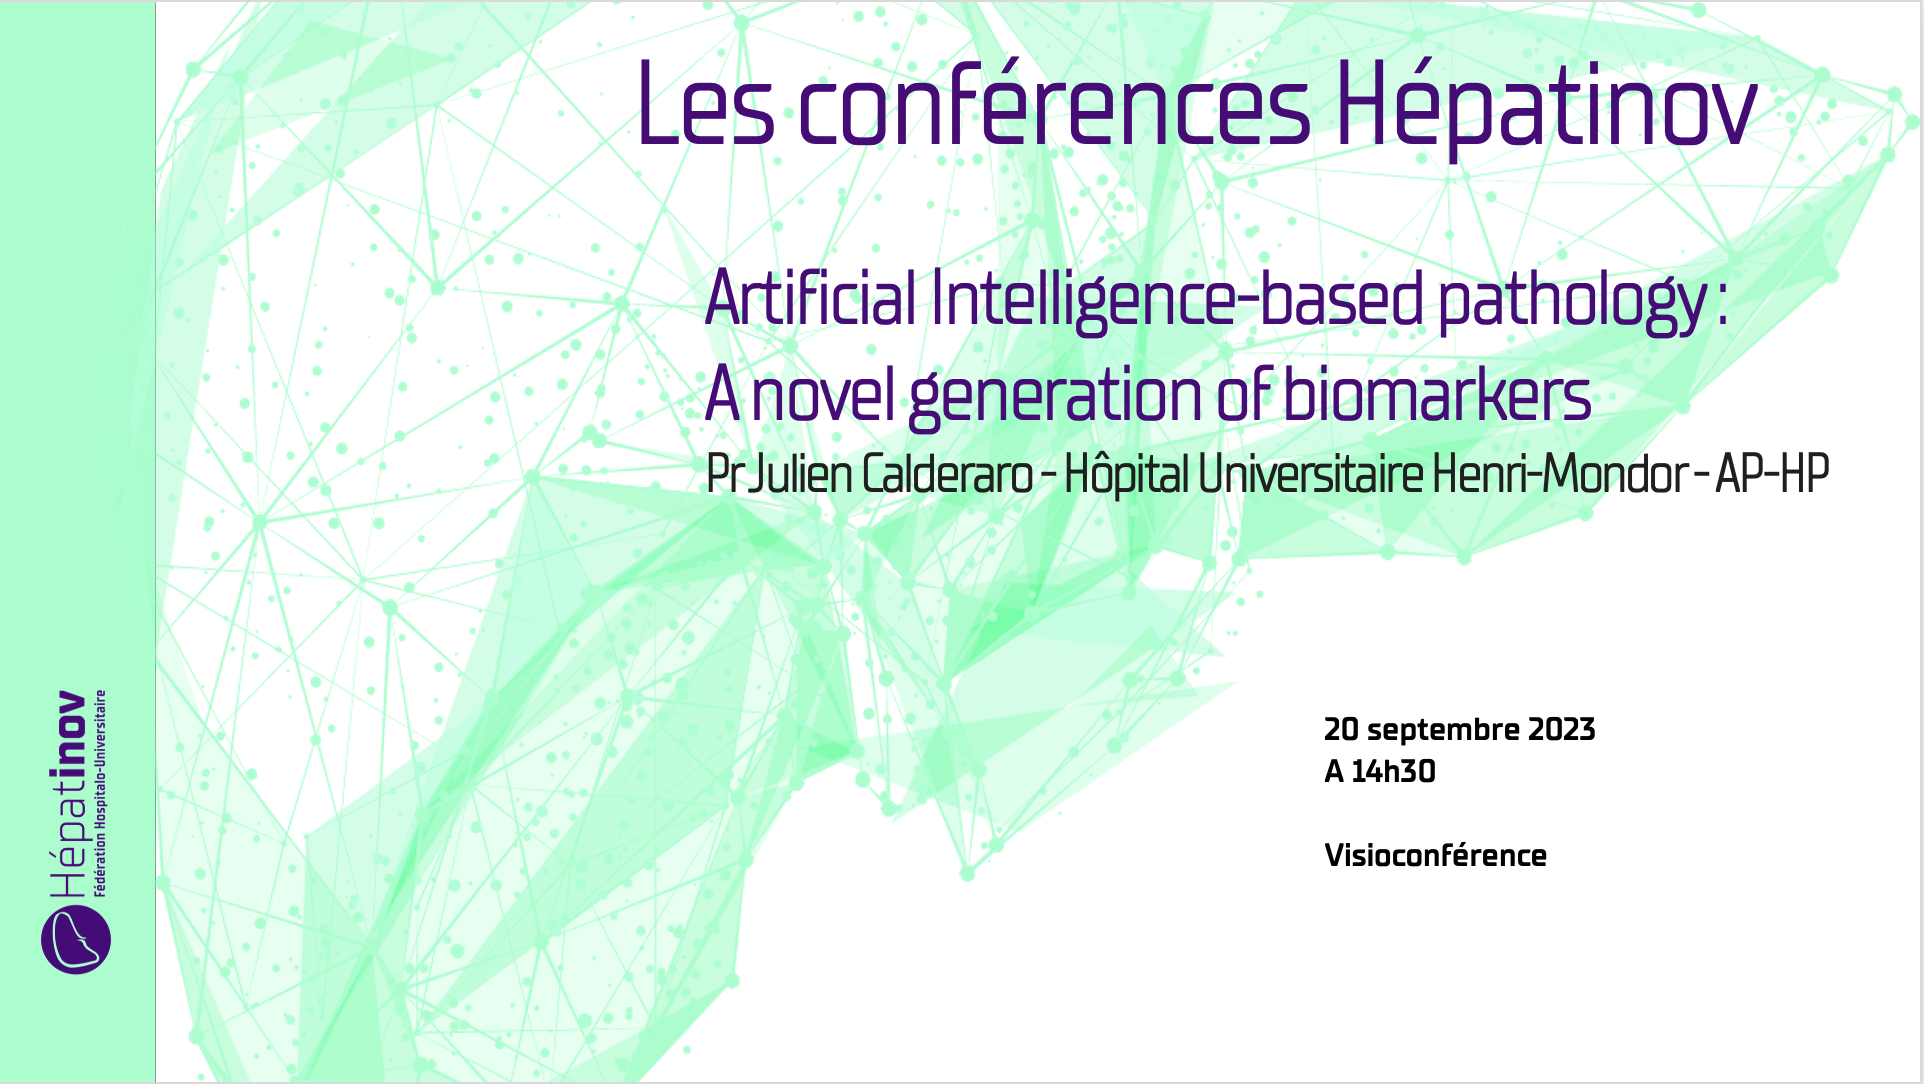 Les conférences Hépatinov - Artificial Intelligence-based pathology - 20 septembre 2023